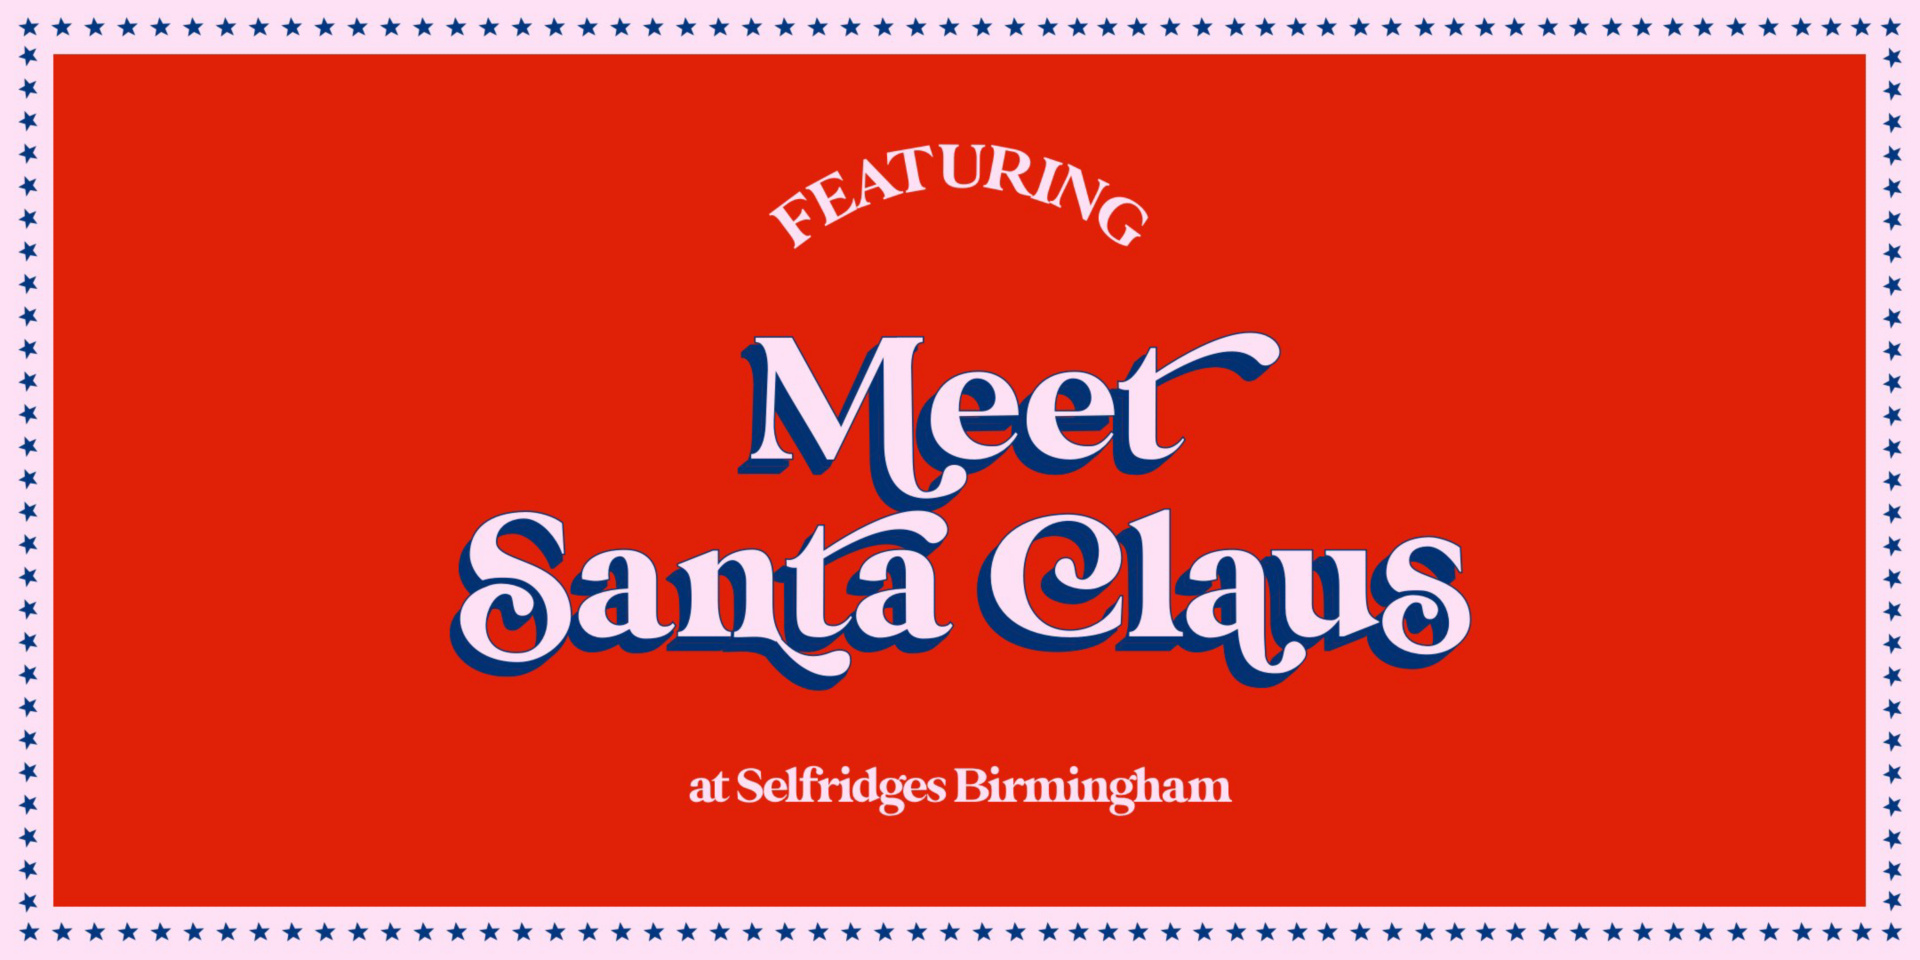 Meet Santa Claus at Selfridges Birmingham